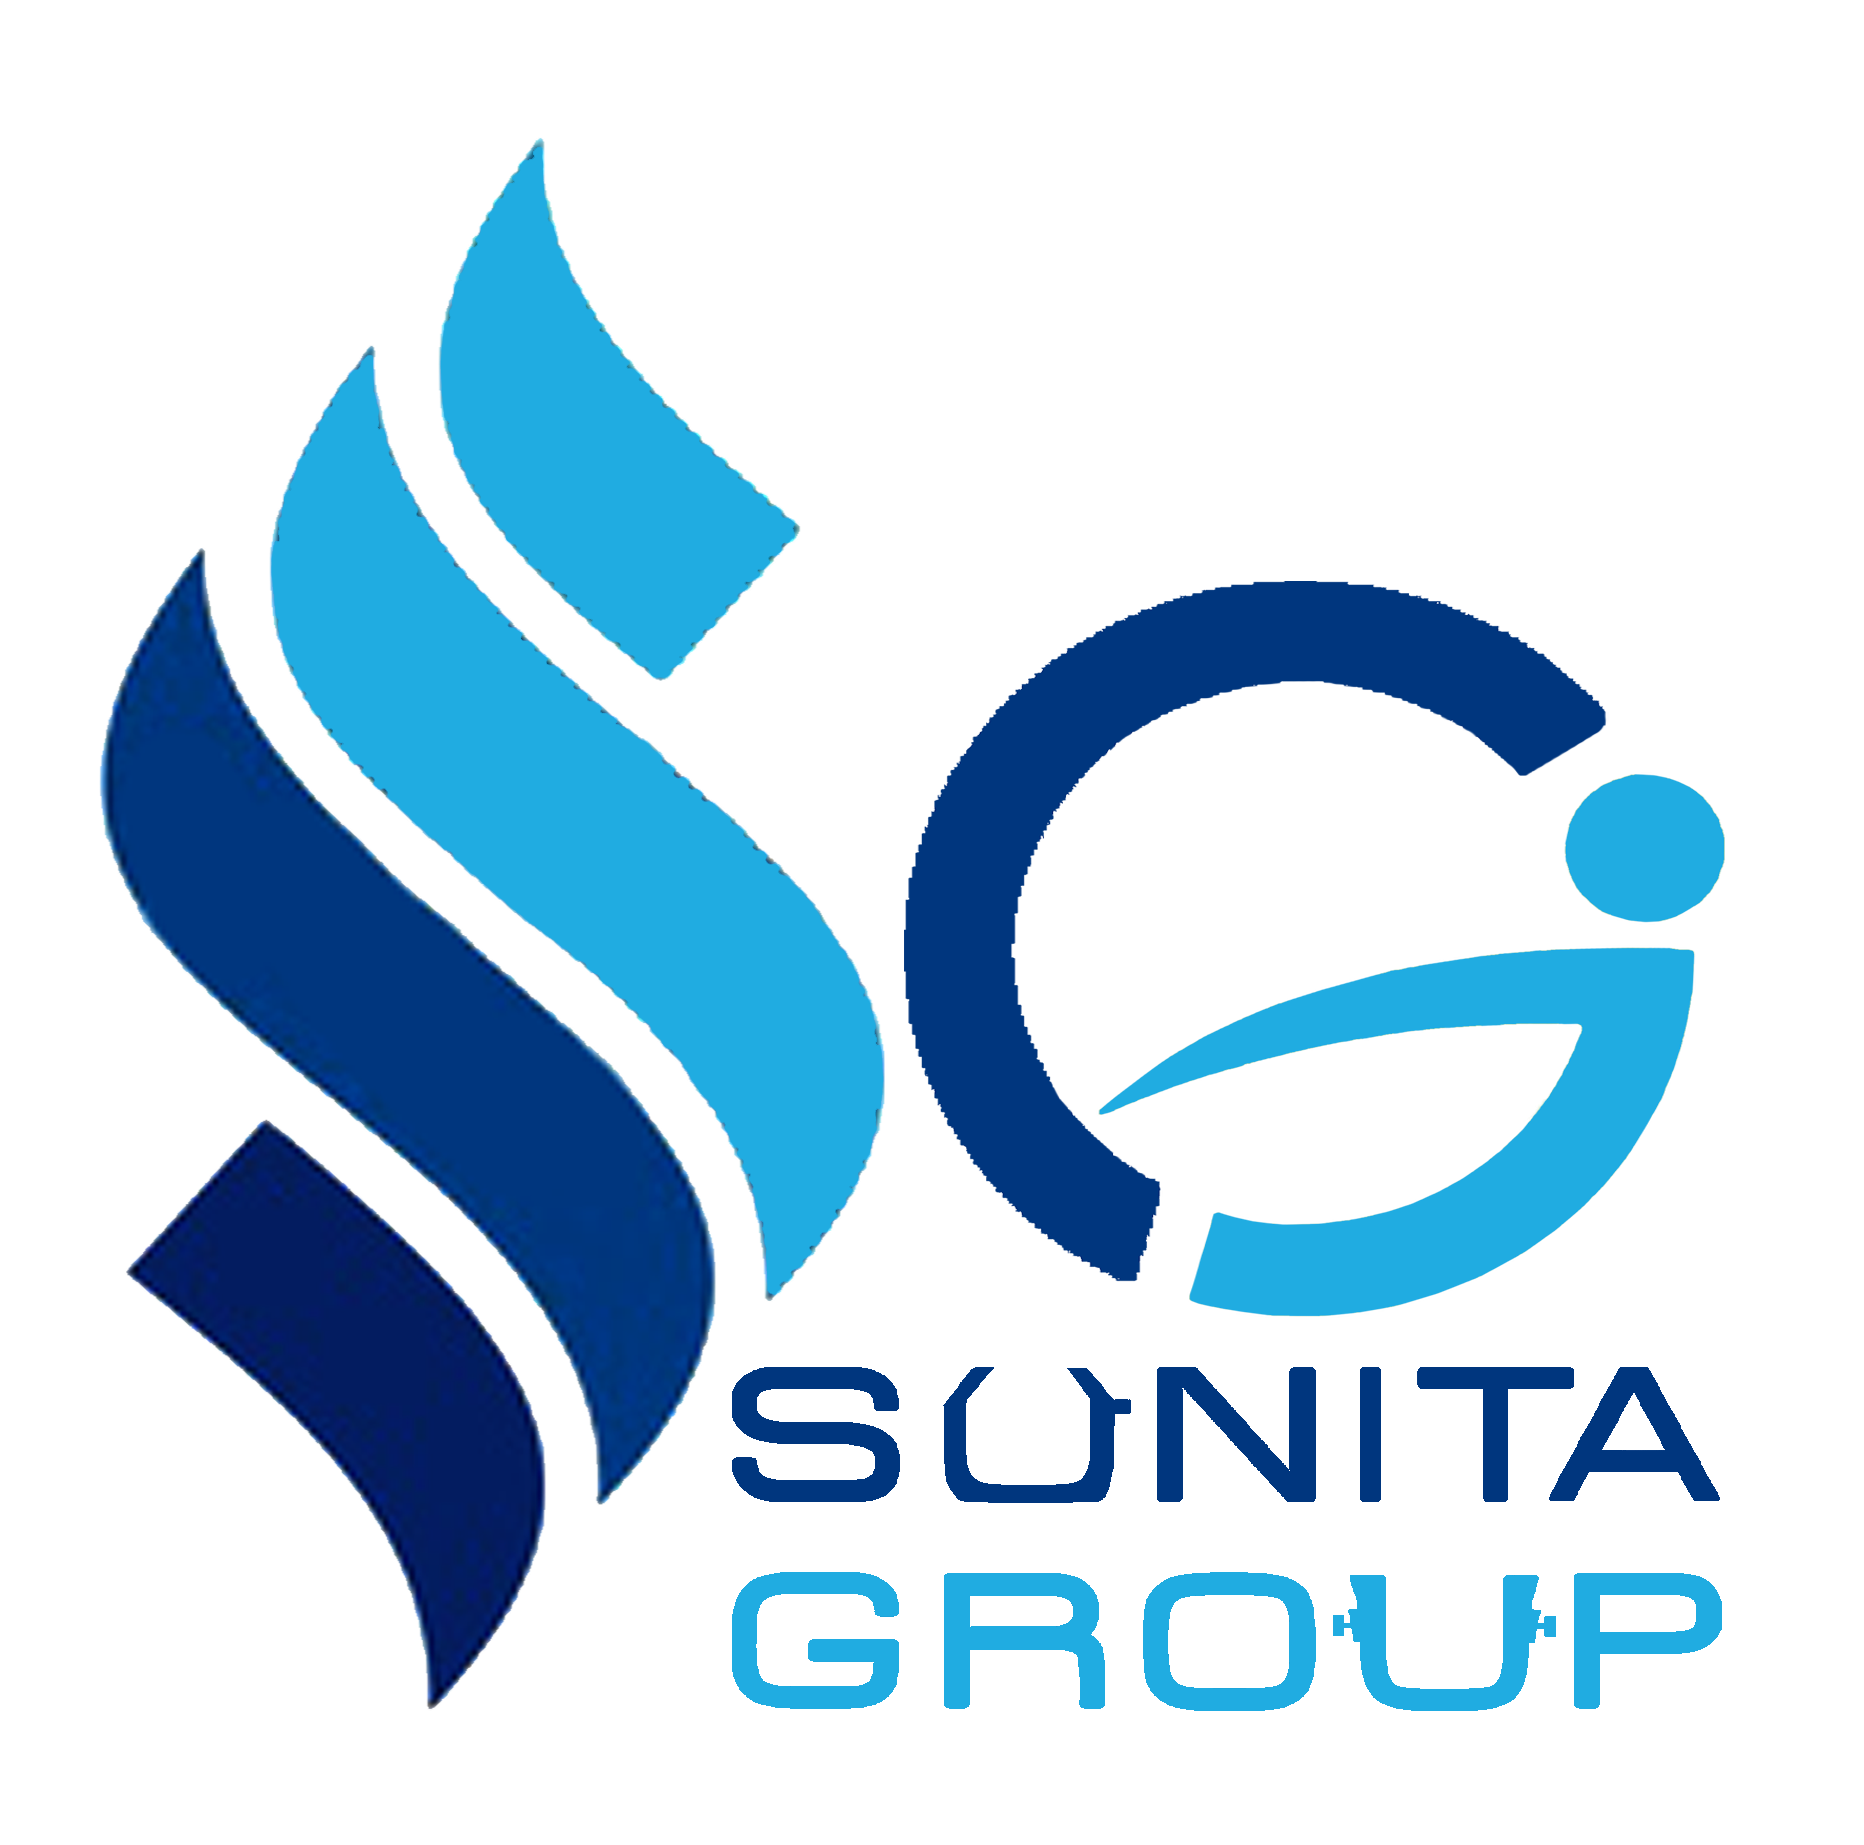 Sunita Group